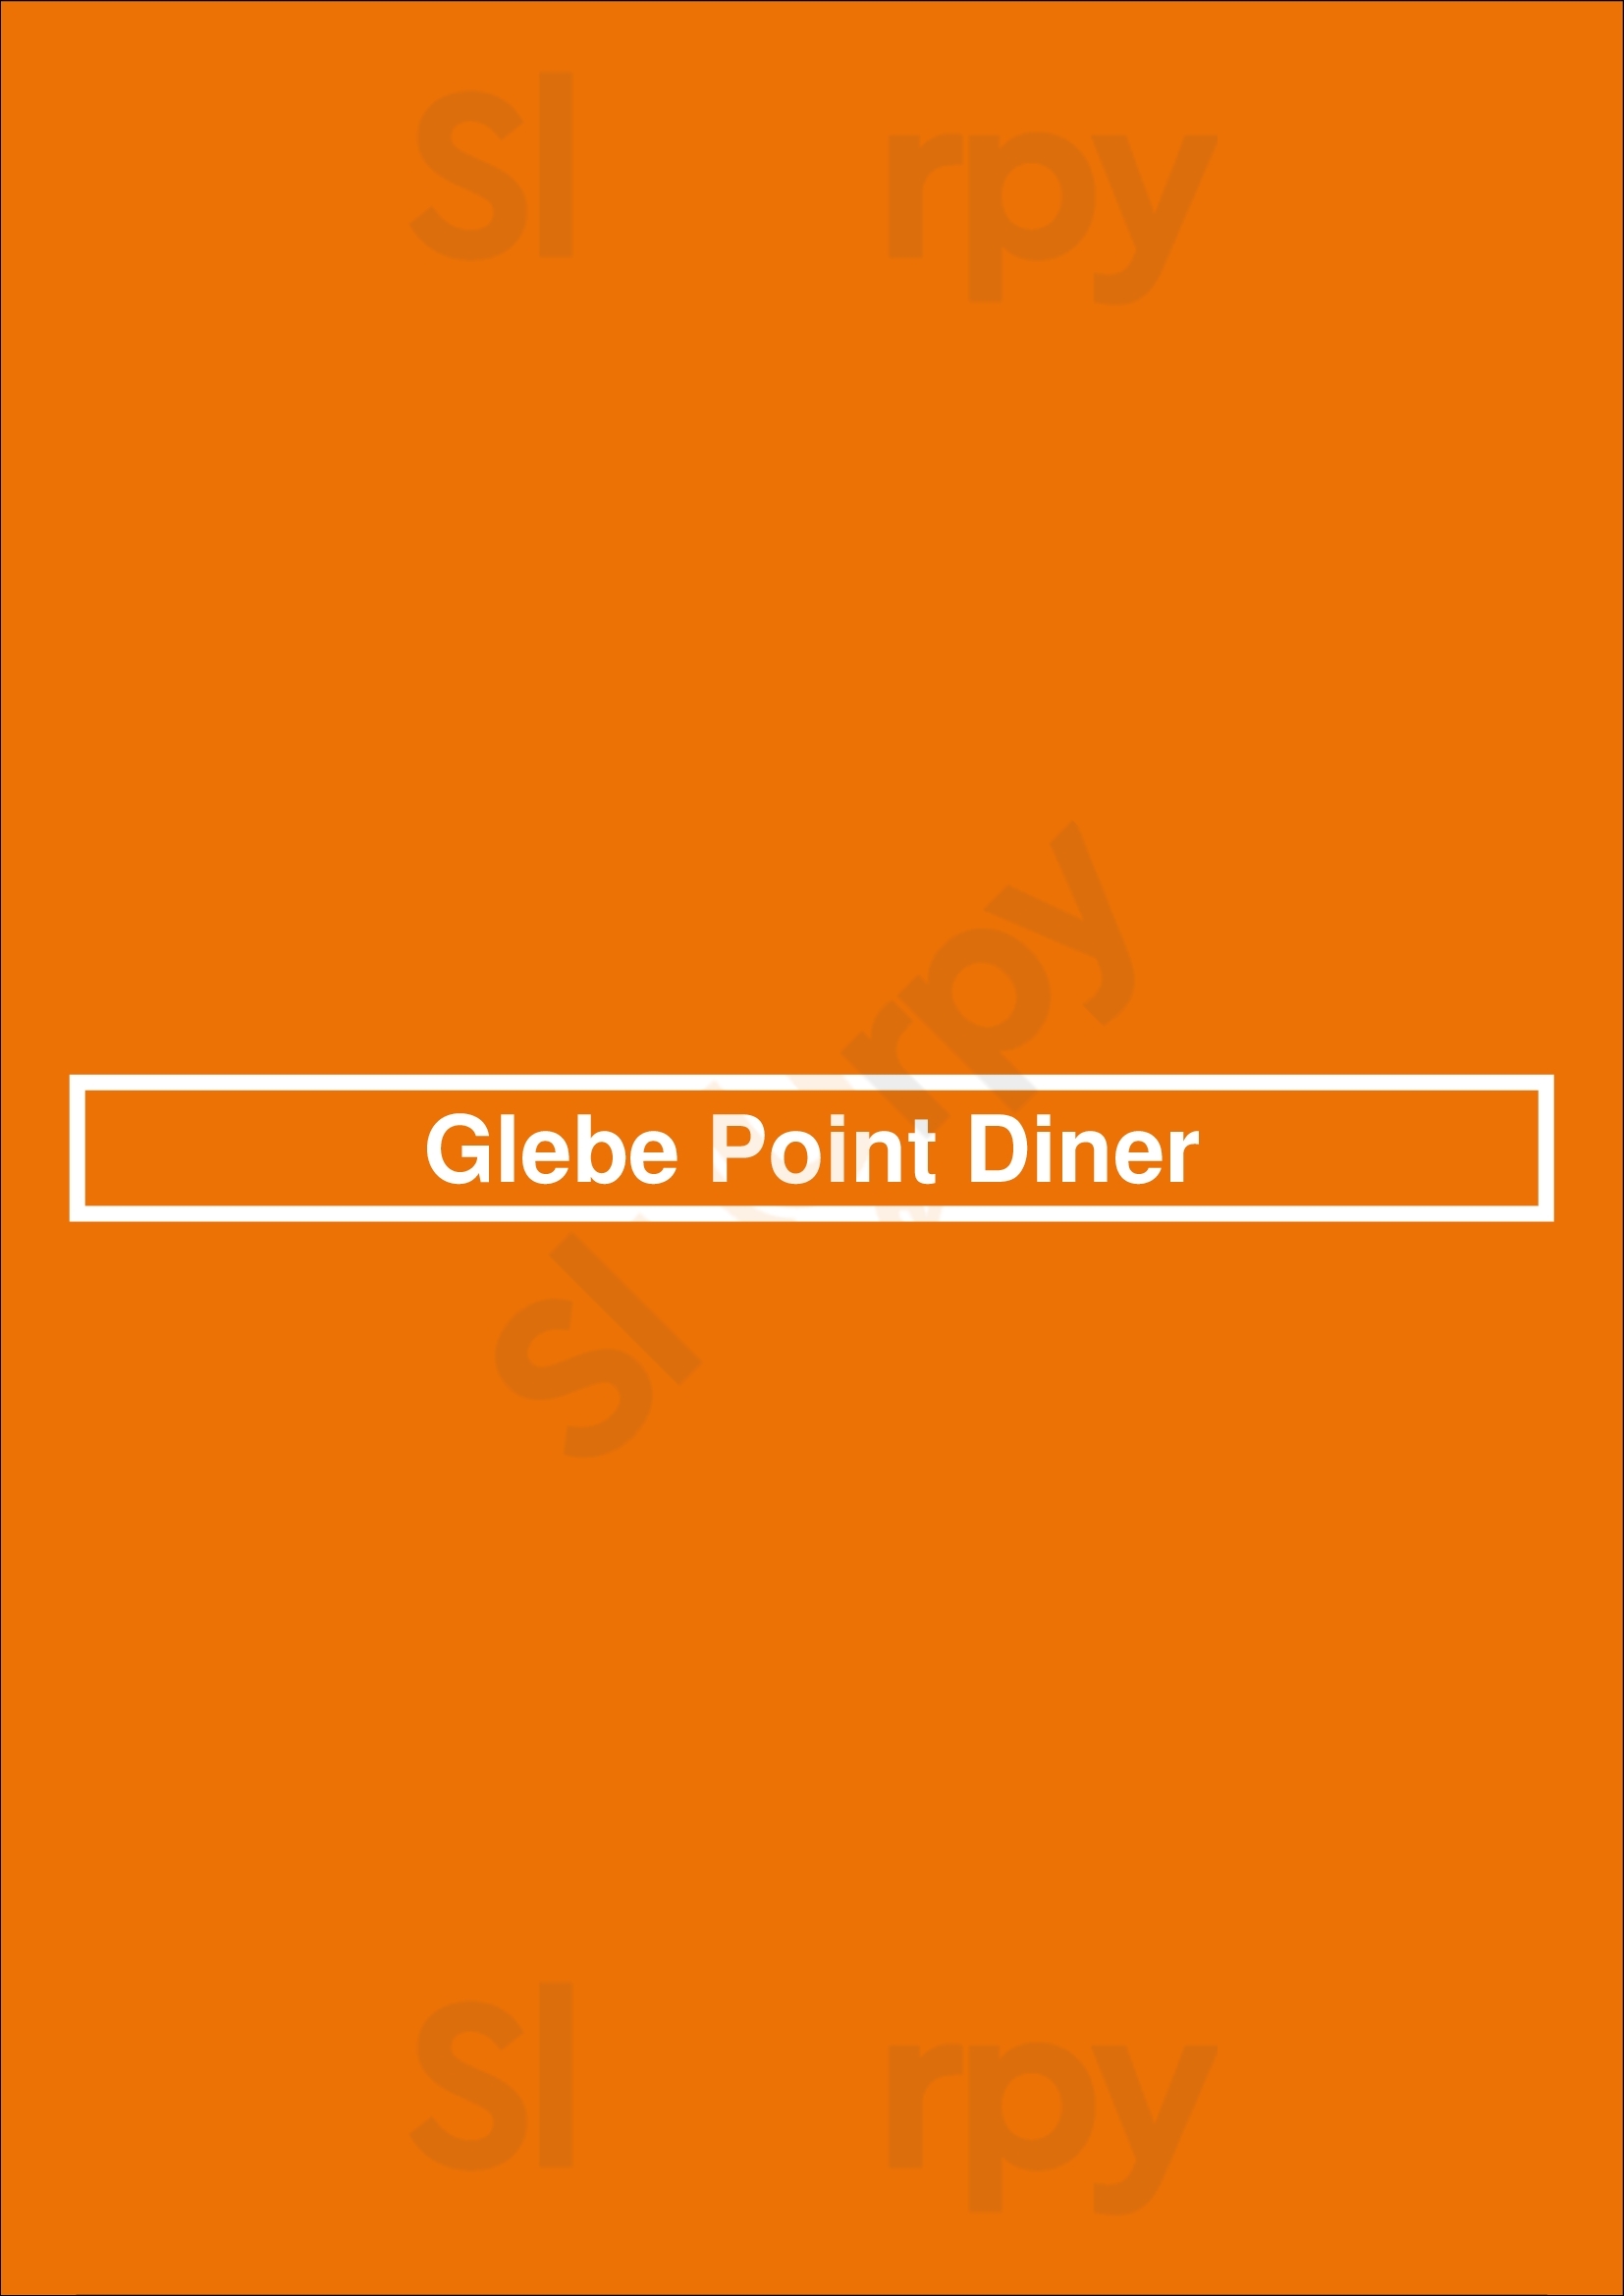 Glebe Point Diner Sydney Menu - 1